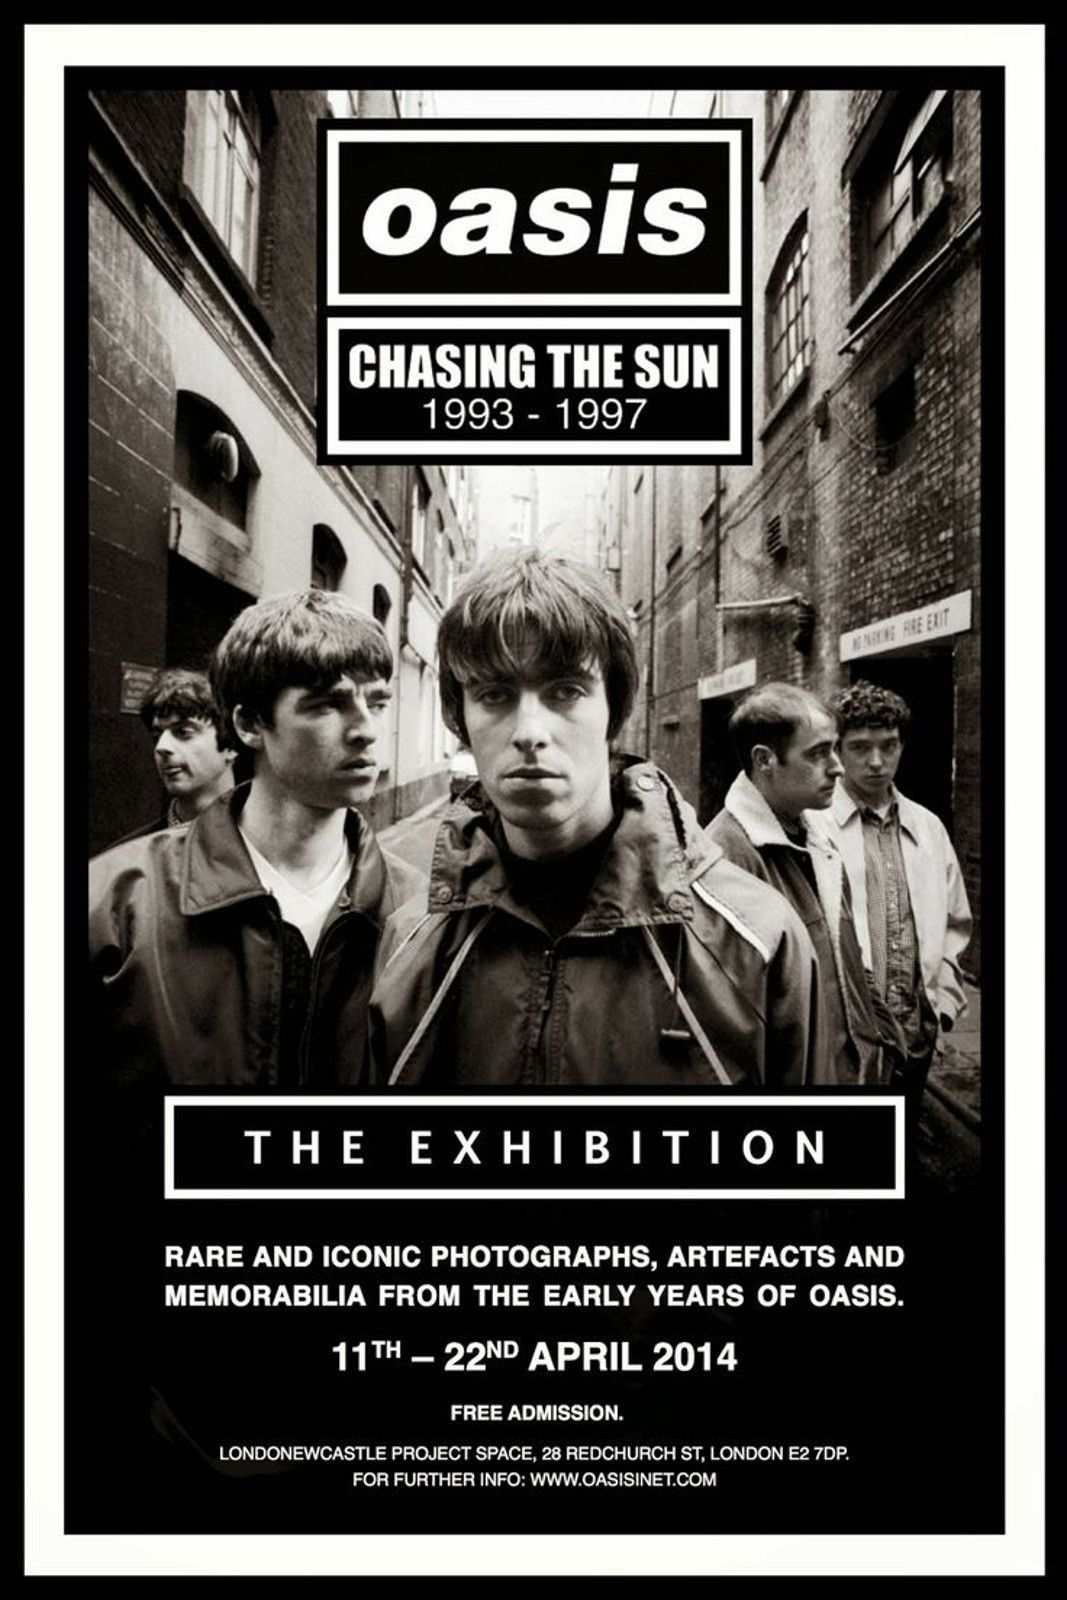 Oasis the Sun 1993